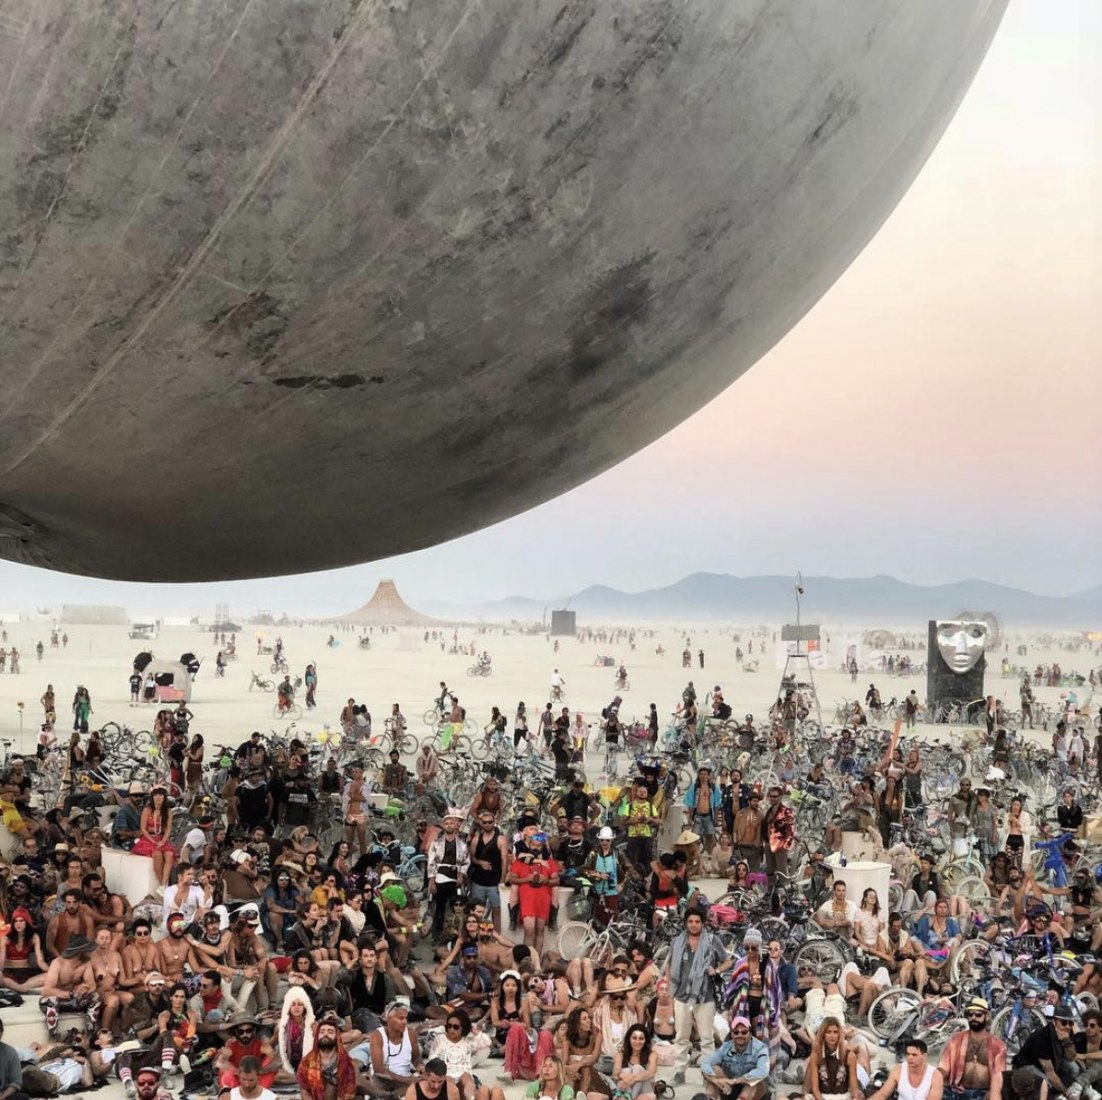 Orb, a giant sphere by Bjarke Ingels in Burning Man 2018. Courtesy of Bjarke Ingels